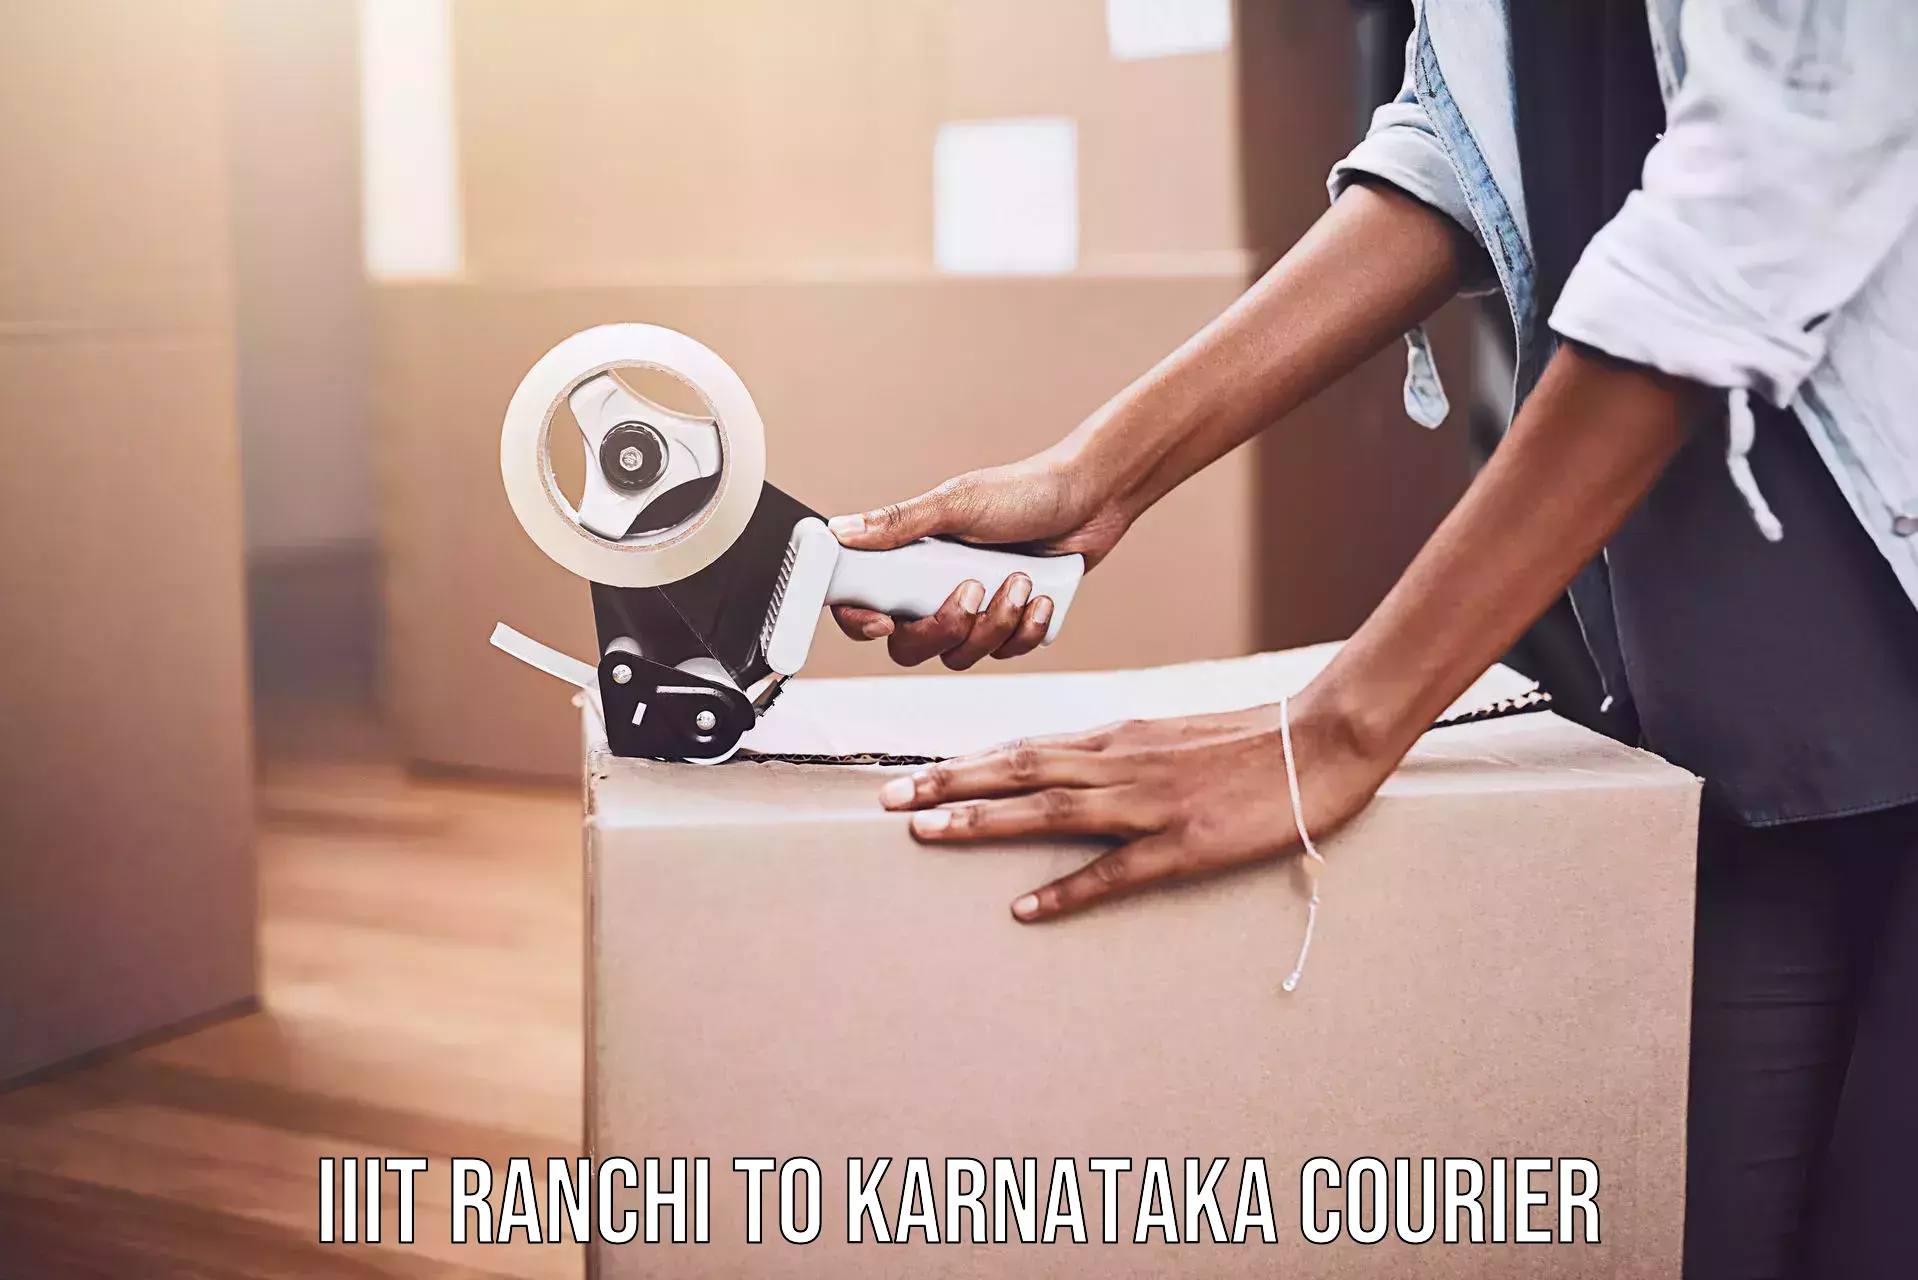 24-hour courier service IIIT Ranchi to Karnataka